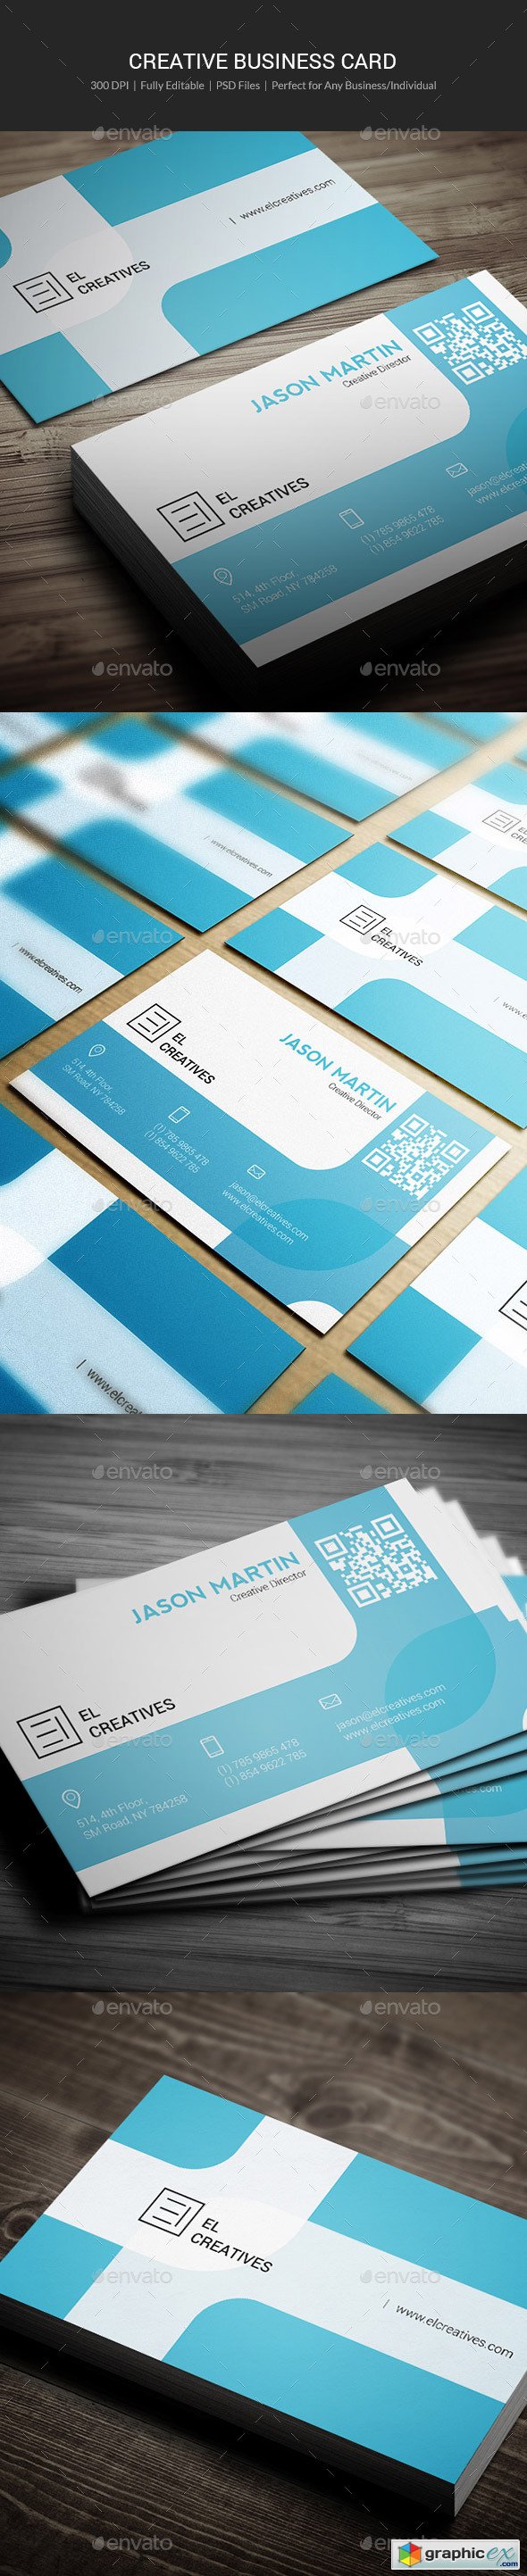 Creative Business Card - 02